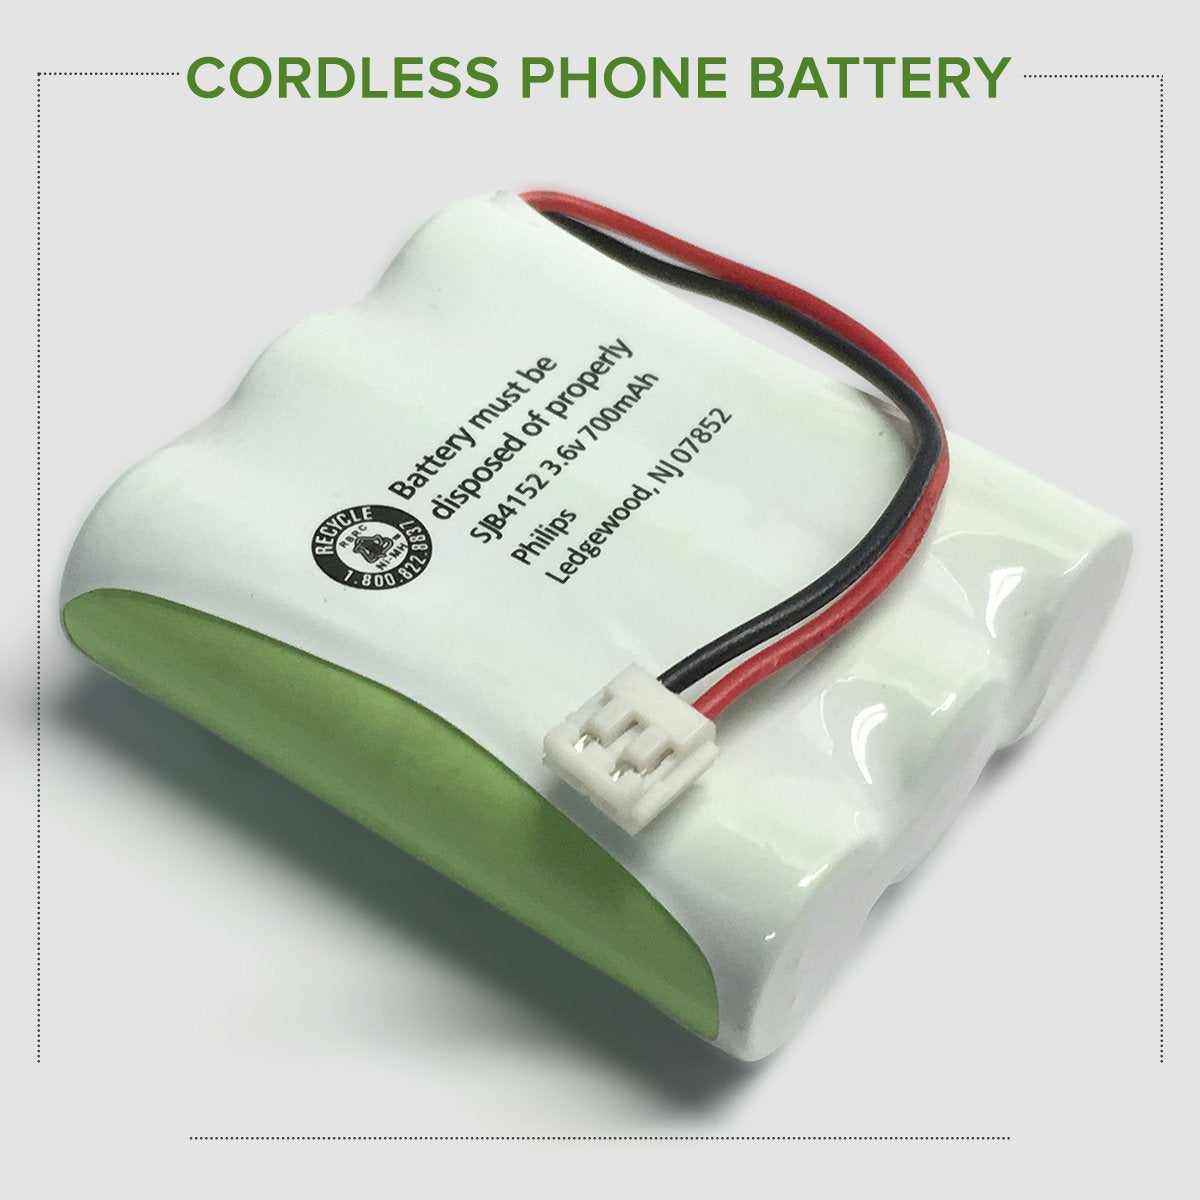 GE 2-6900 Cordless Phone Battery